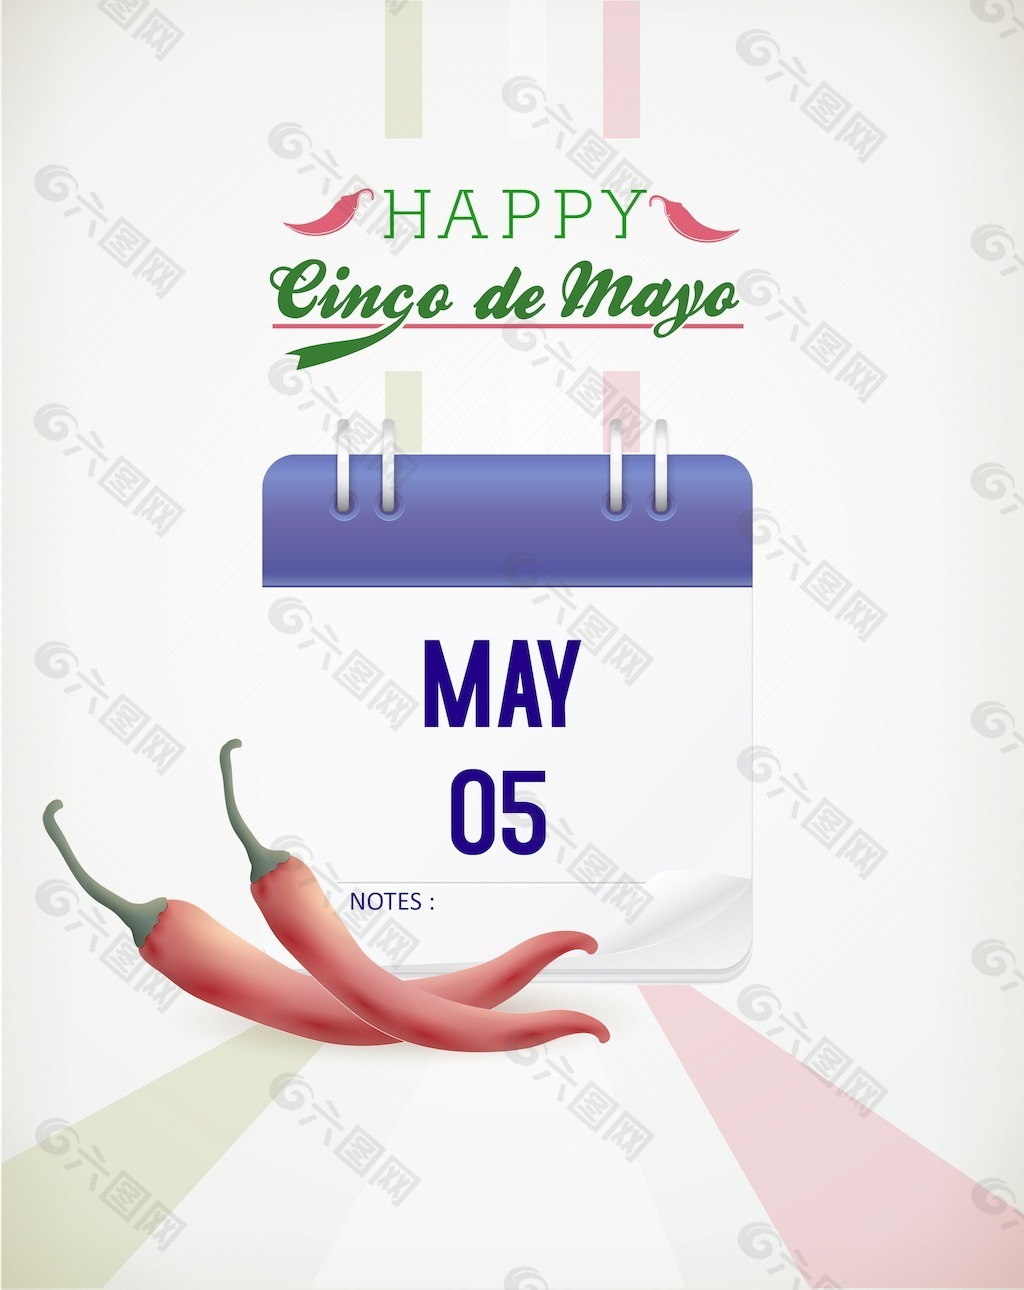 Cinco de Mayo矢量插画辣椒标签和日历